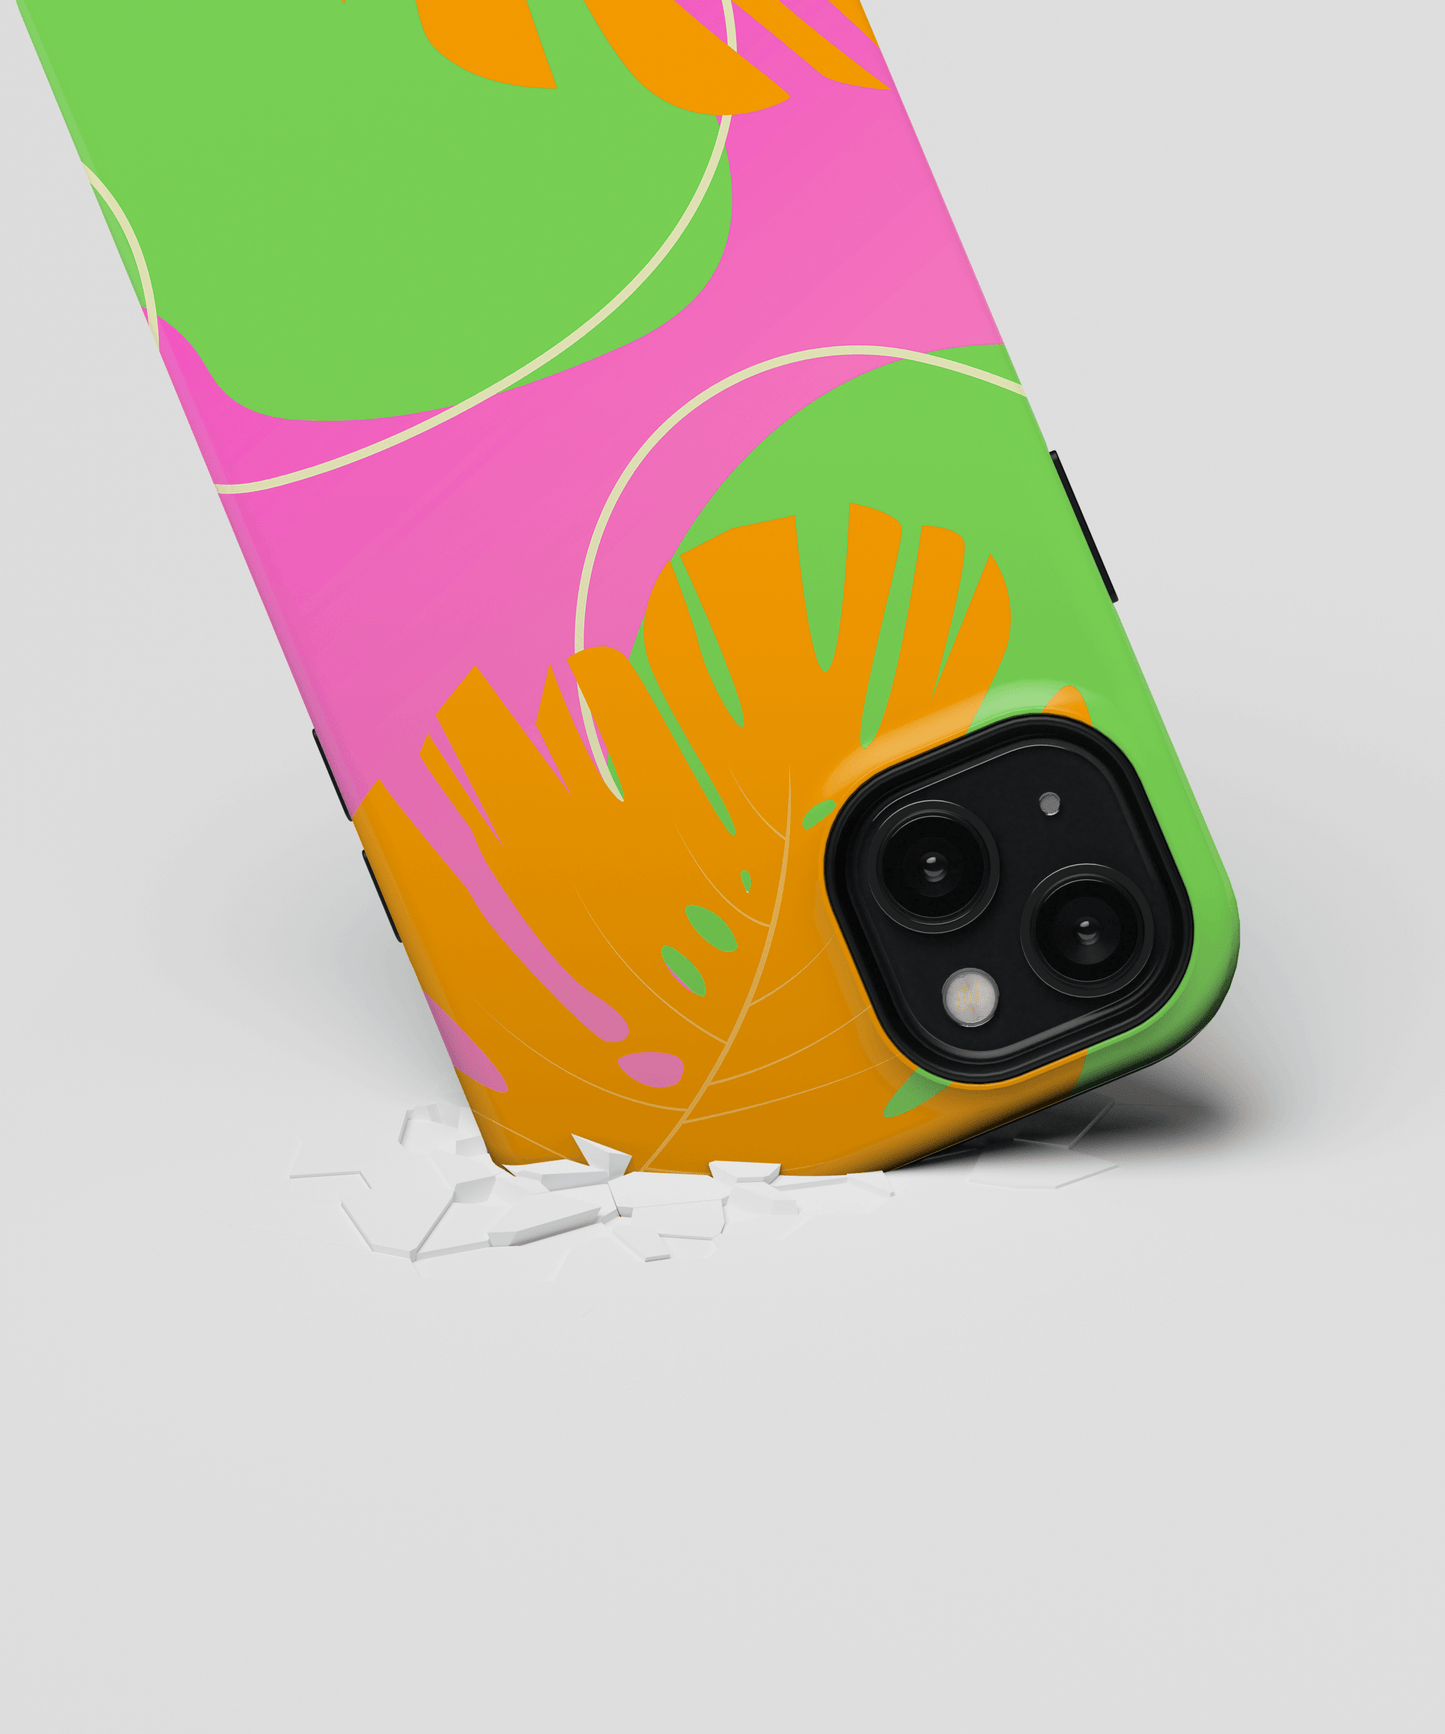 Neonpalms - Samsung Galaxy S22 phone case